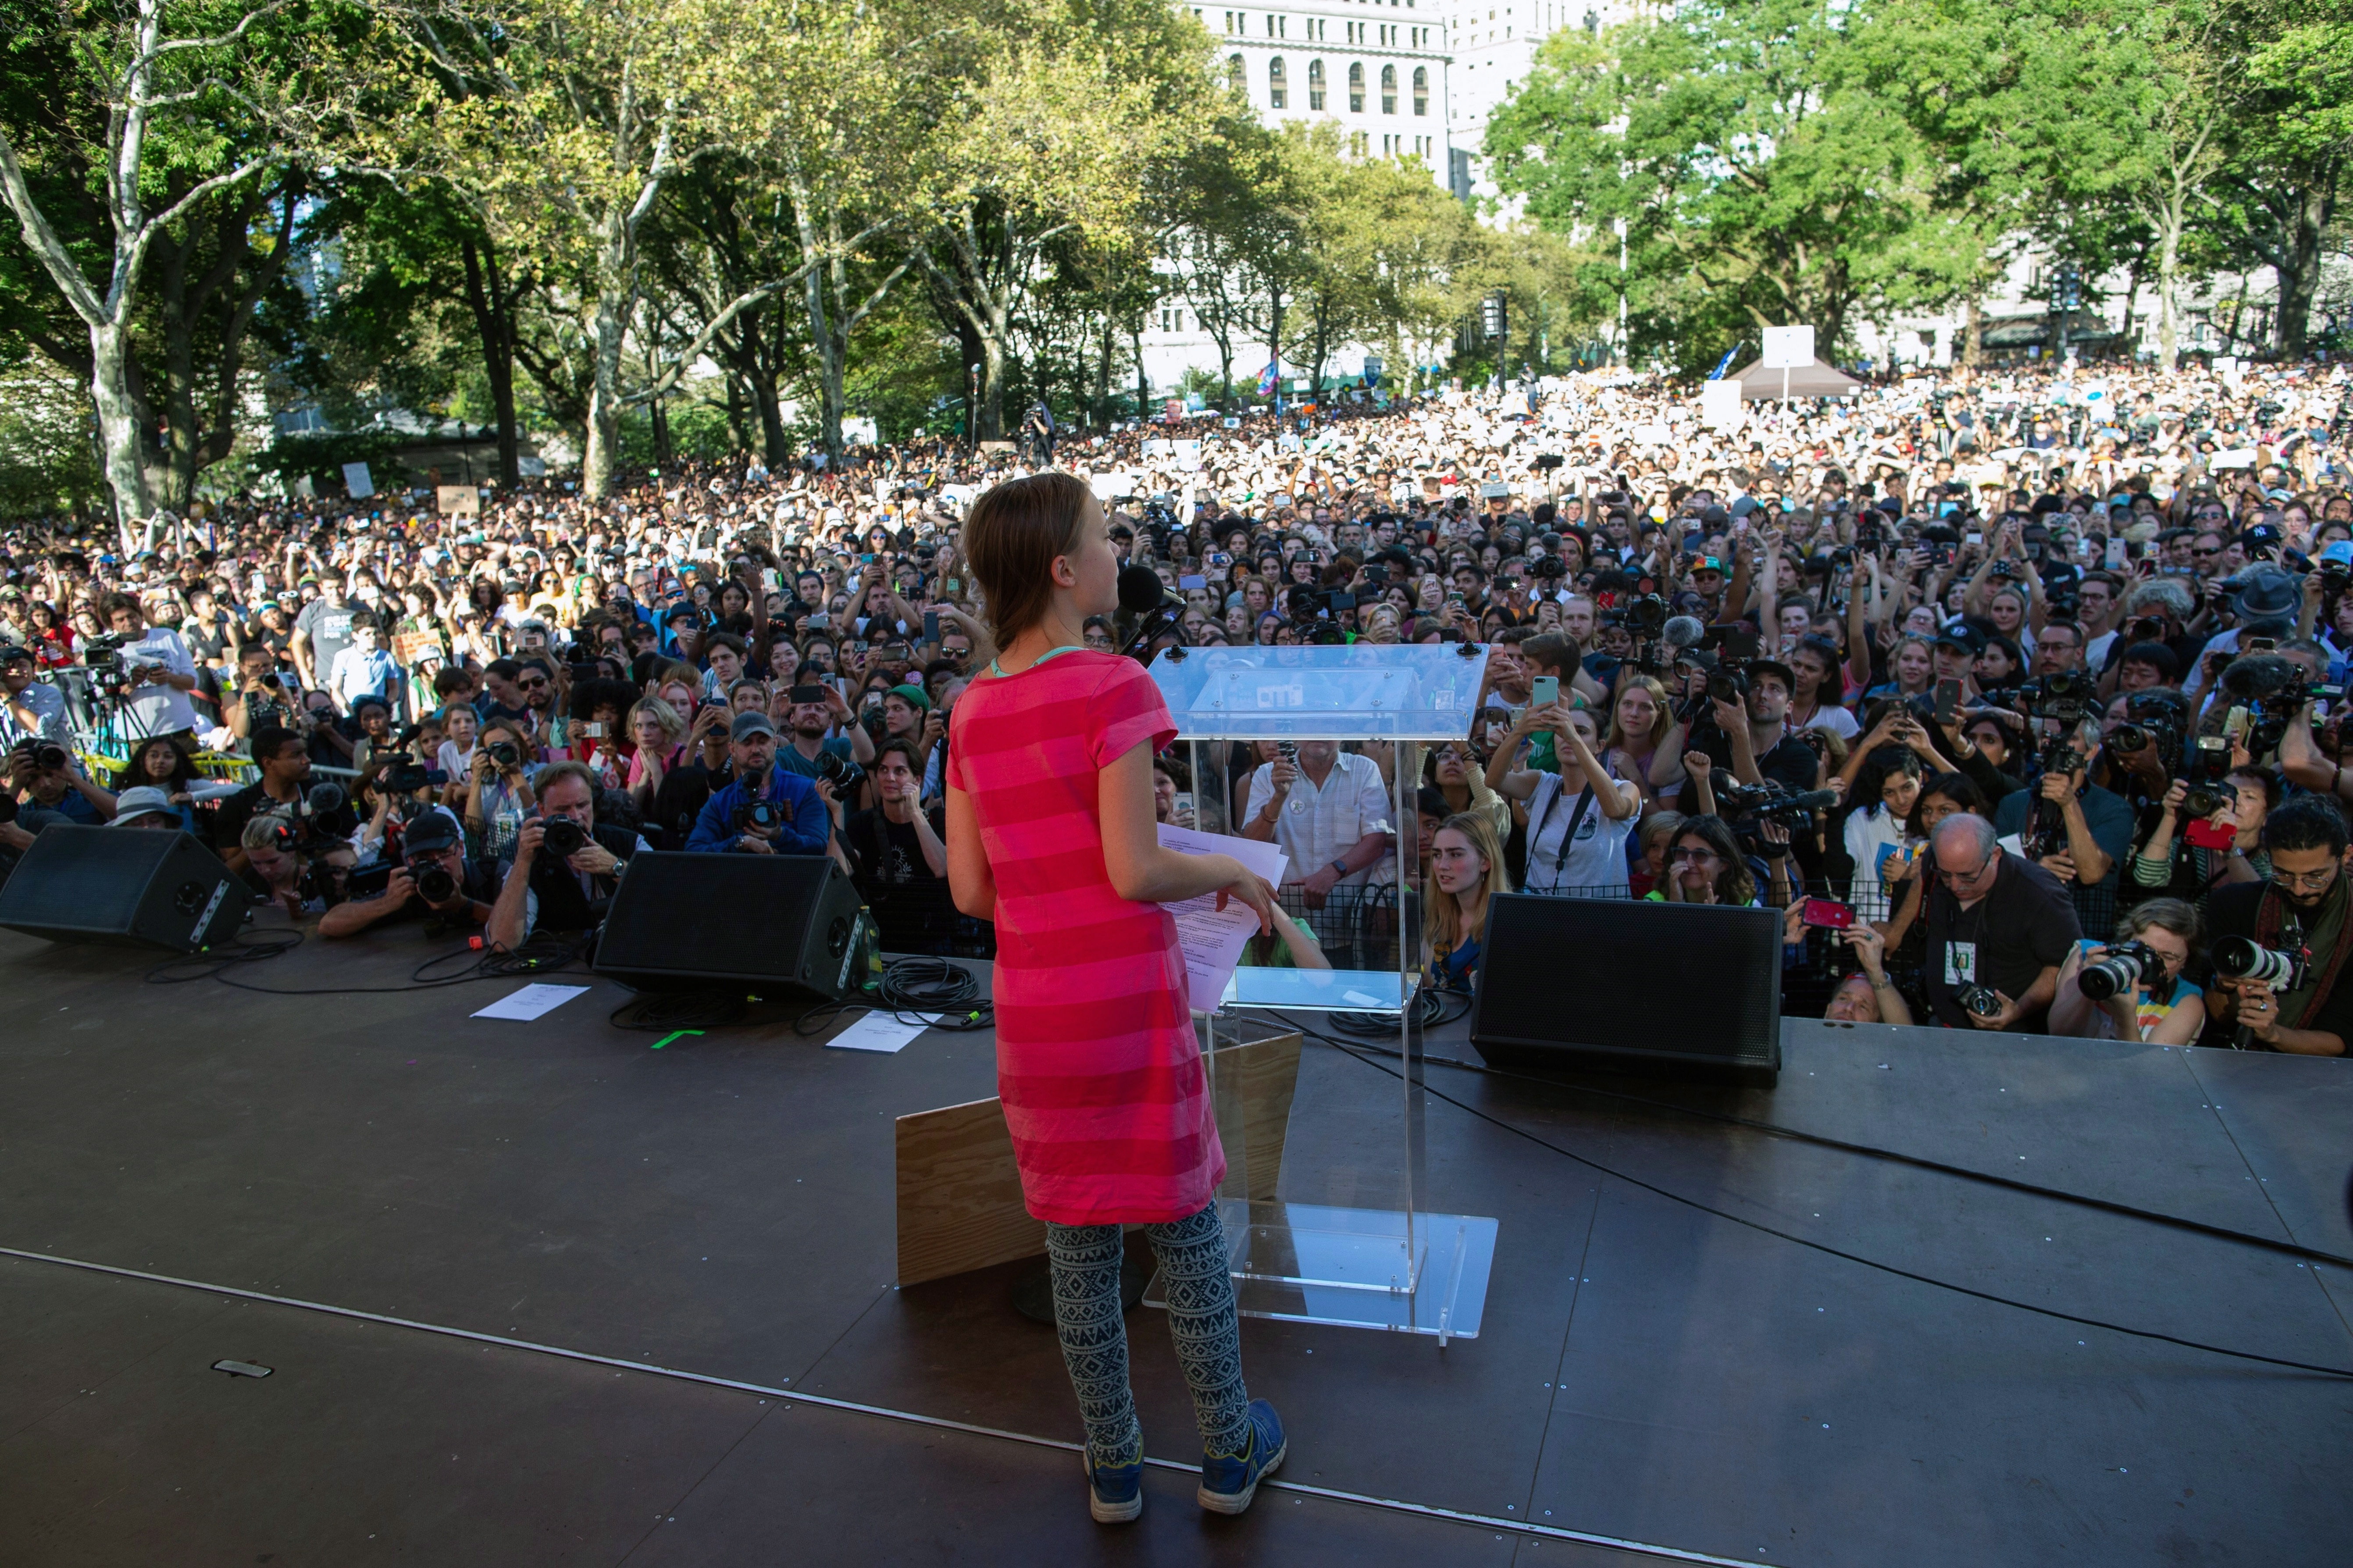 Greta Thunberg at the NYC climate strike